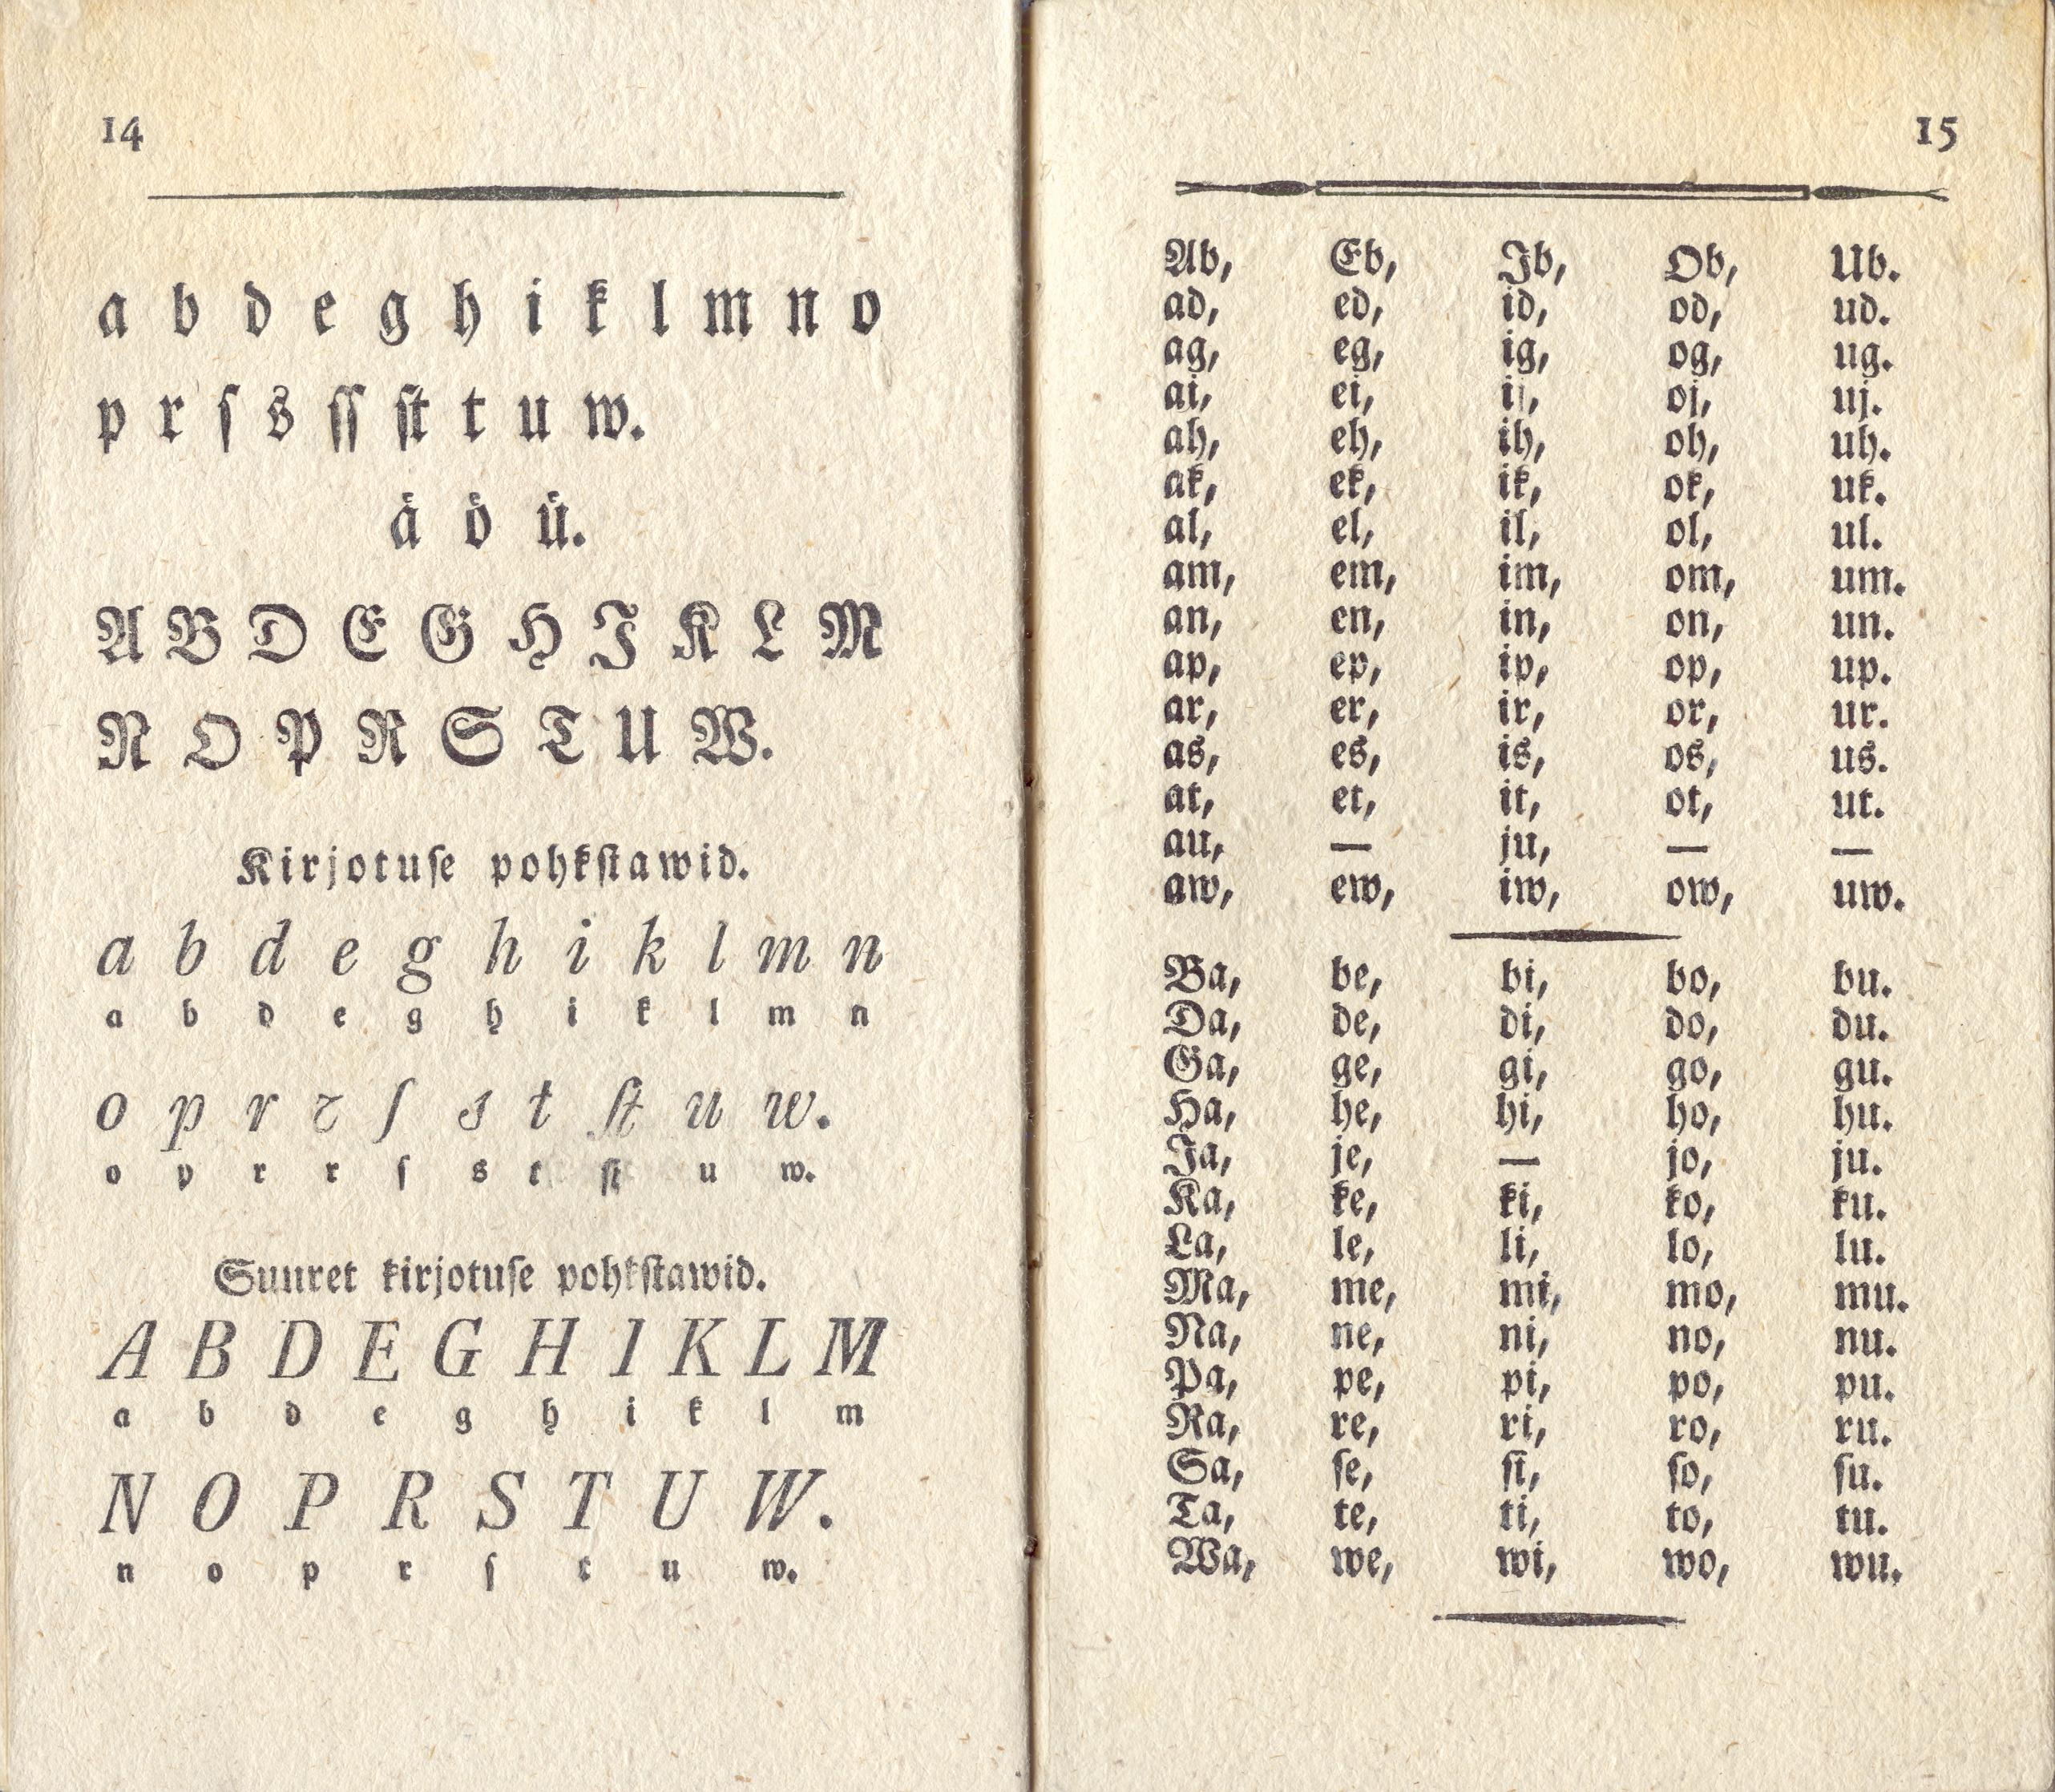 ABD ehk Luggemise-Ramat Lastele (1795) | 9. (14-15) Основной текст